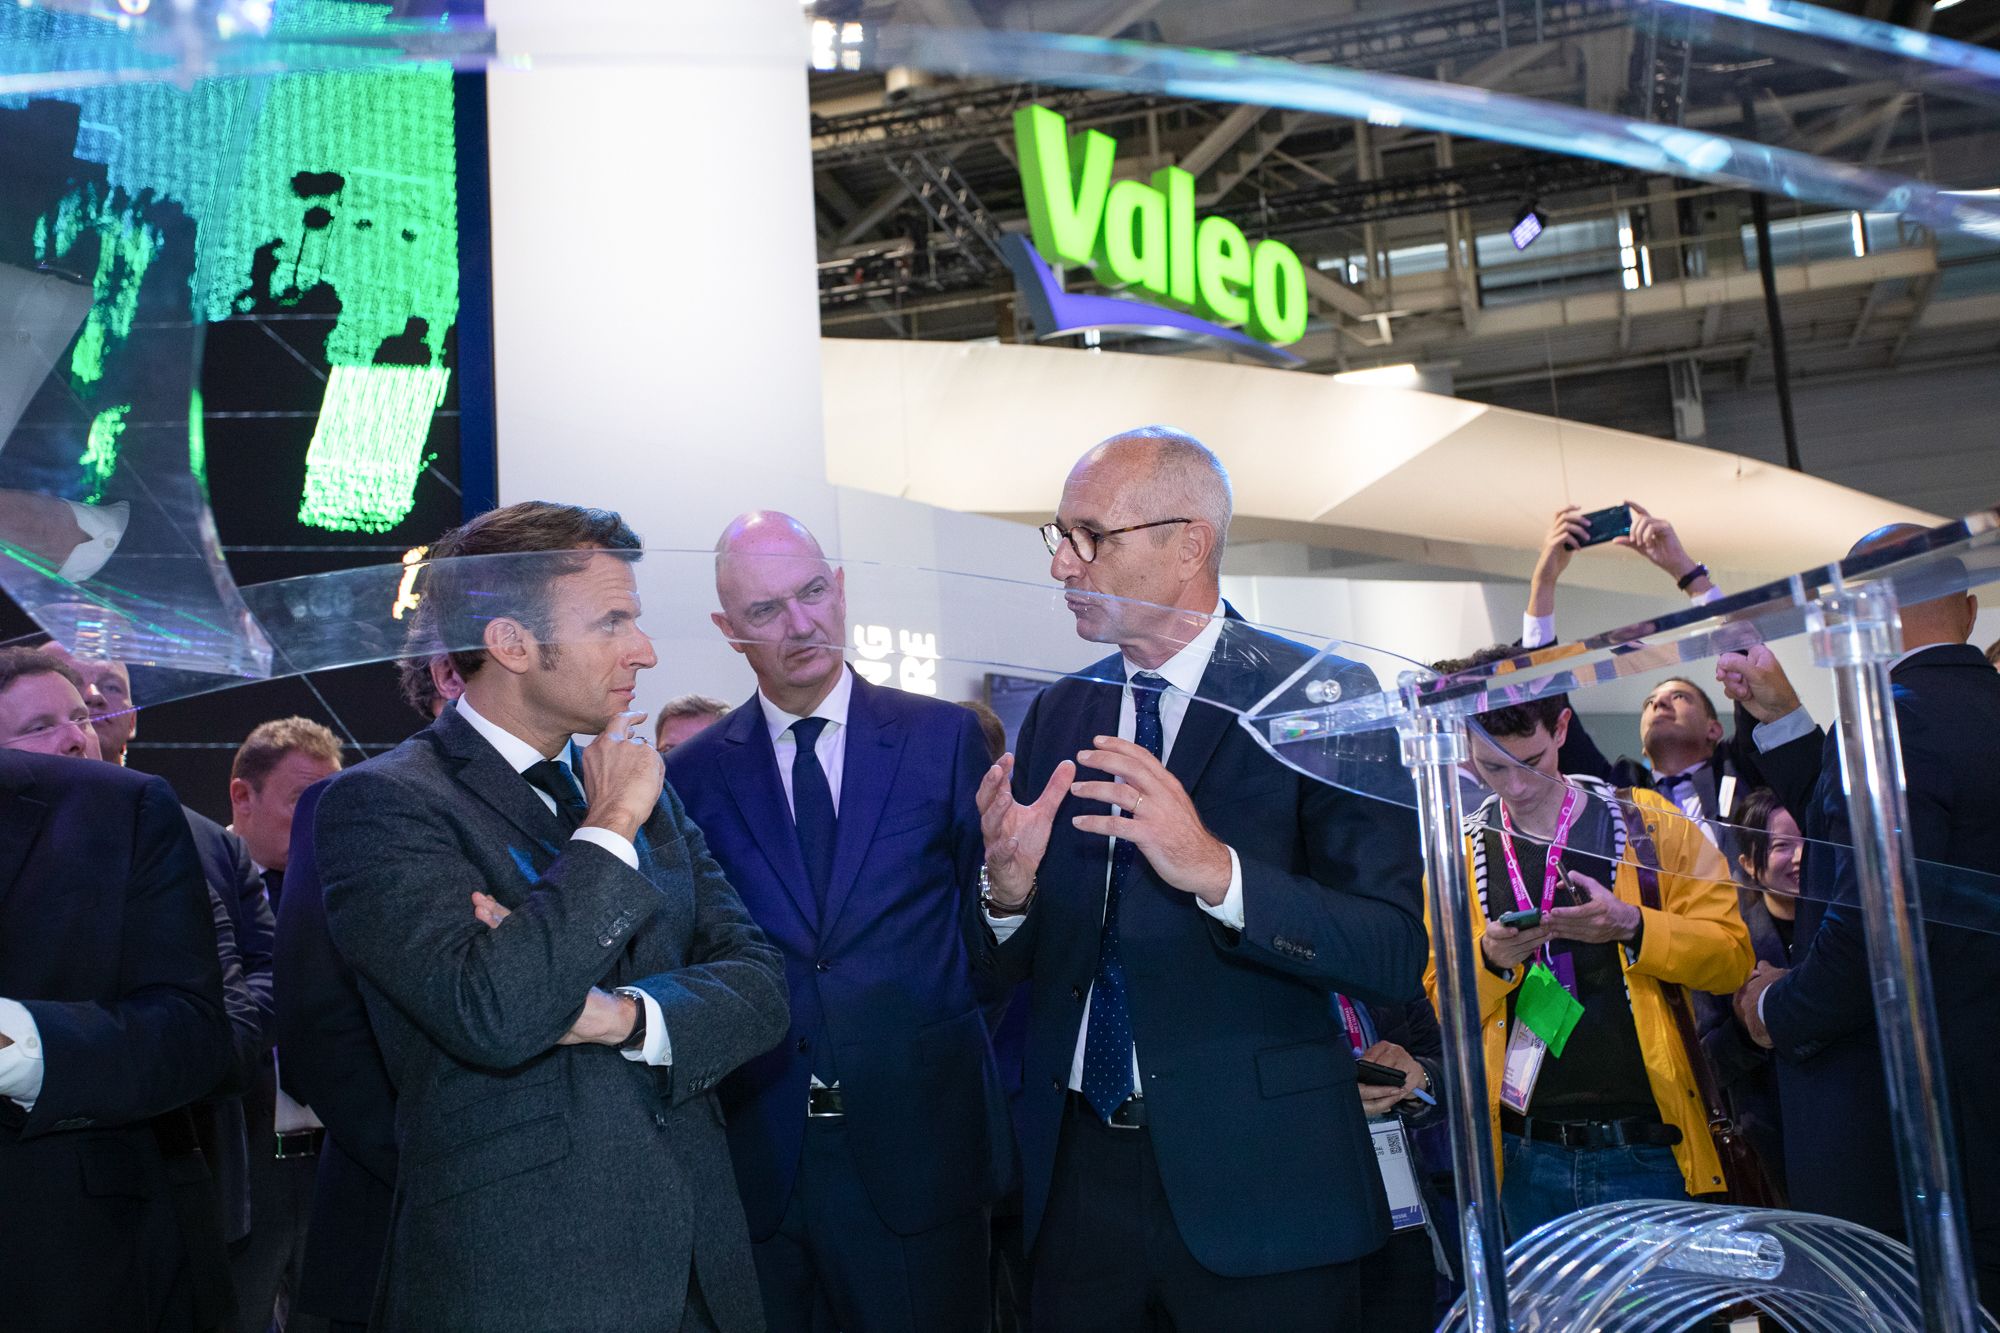 Emmanuel Macron, French President and Christophe Périllat, CEO of Valeo